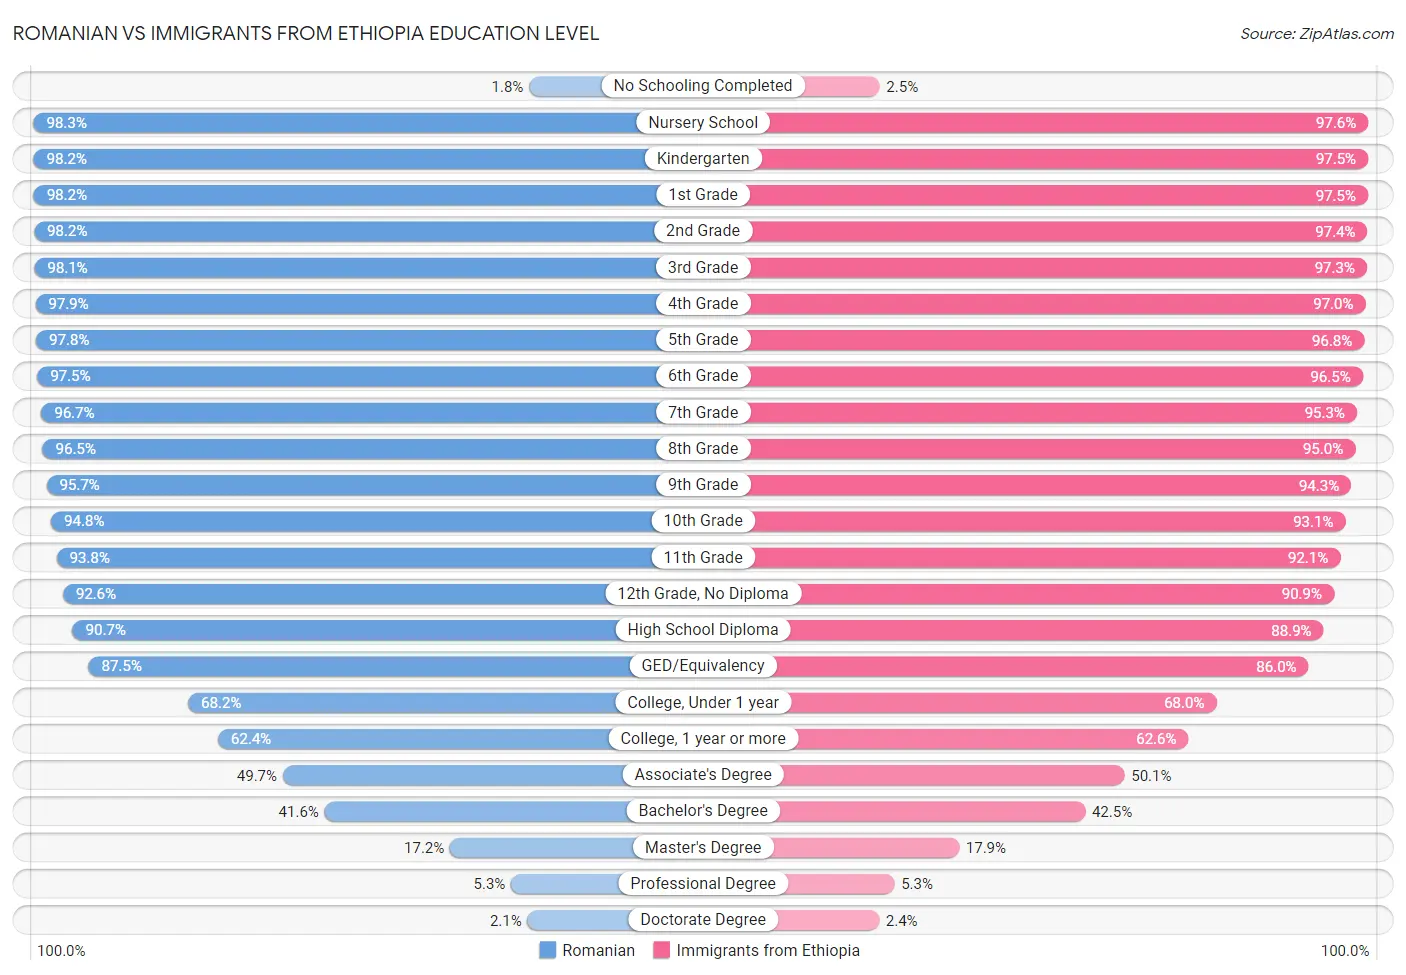 Romanian vs Immigrants from Ethiopia Education Level